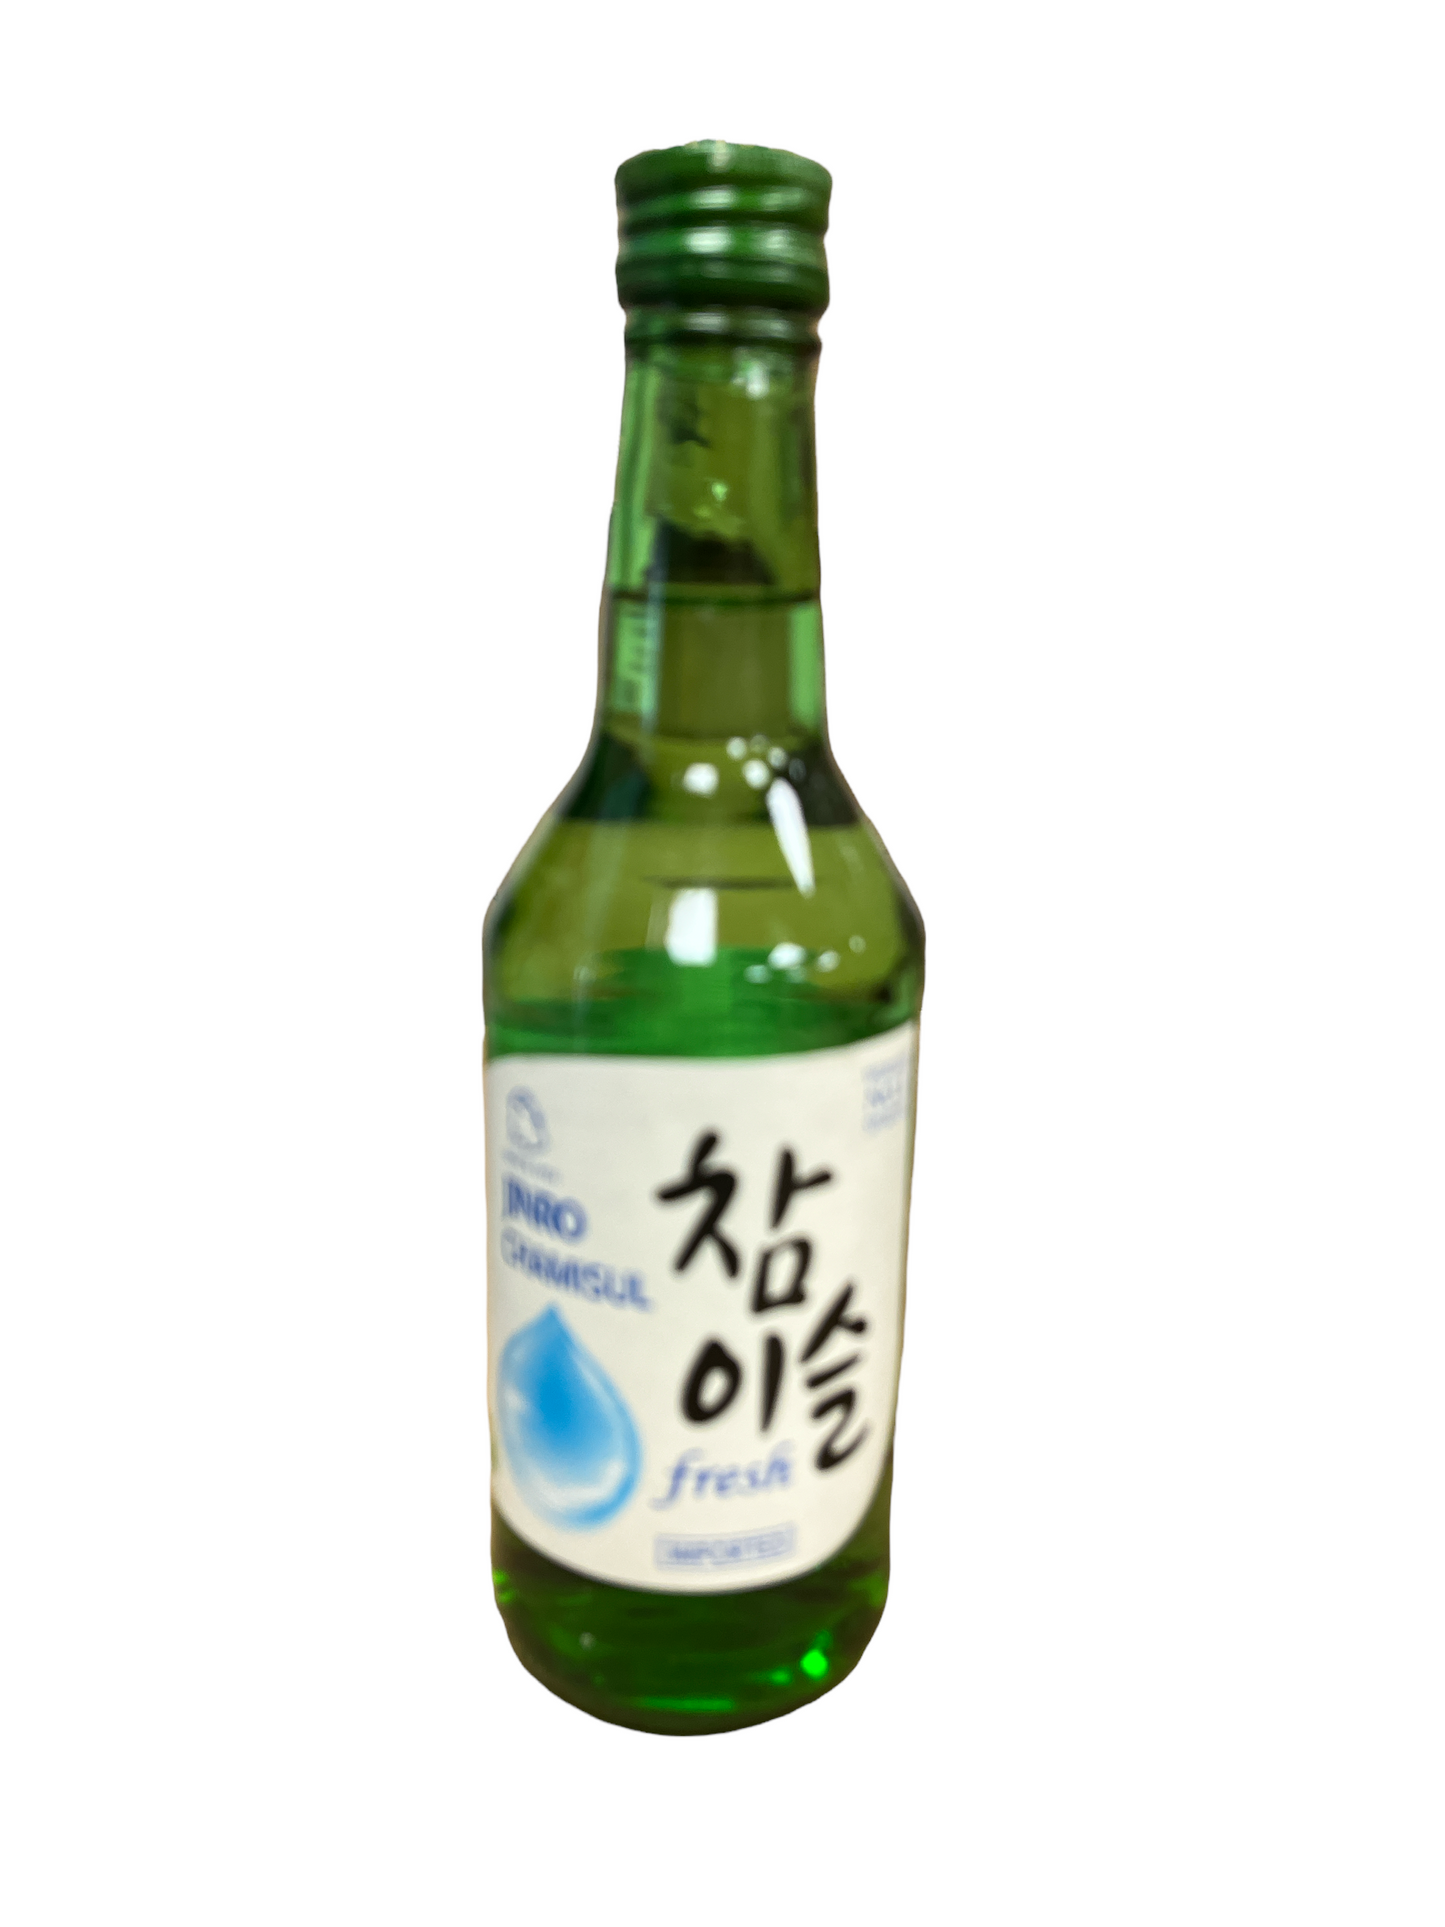 Hitejinro Chamisul Soju (Fresh-Bottle) 350ml Alc 16.9%  韓國燒酒(清酒)